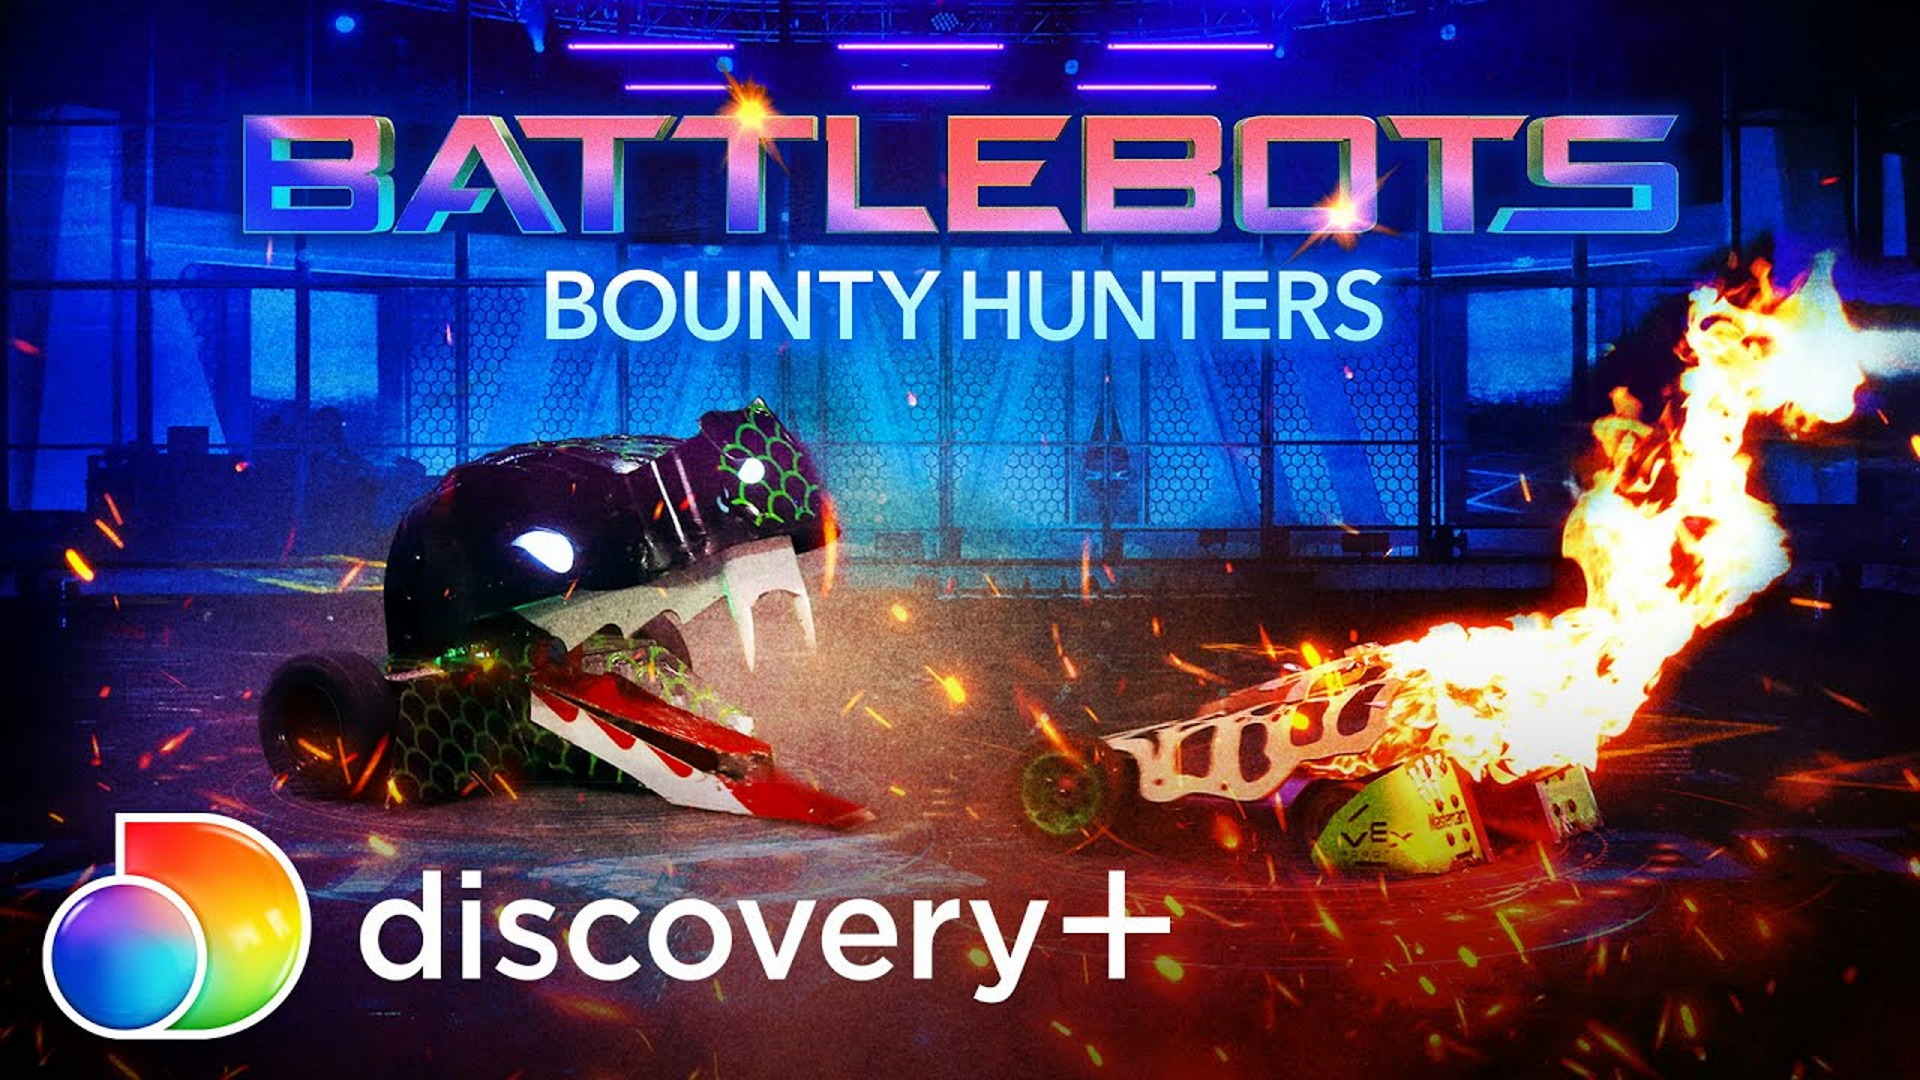 Show BattleBots: Bounty Hunters